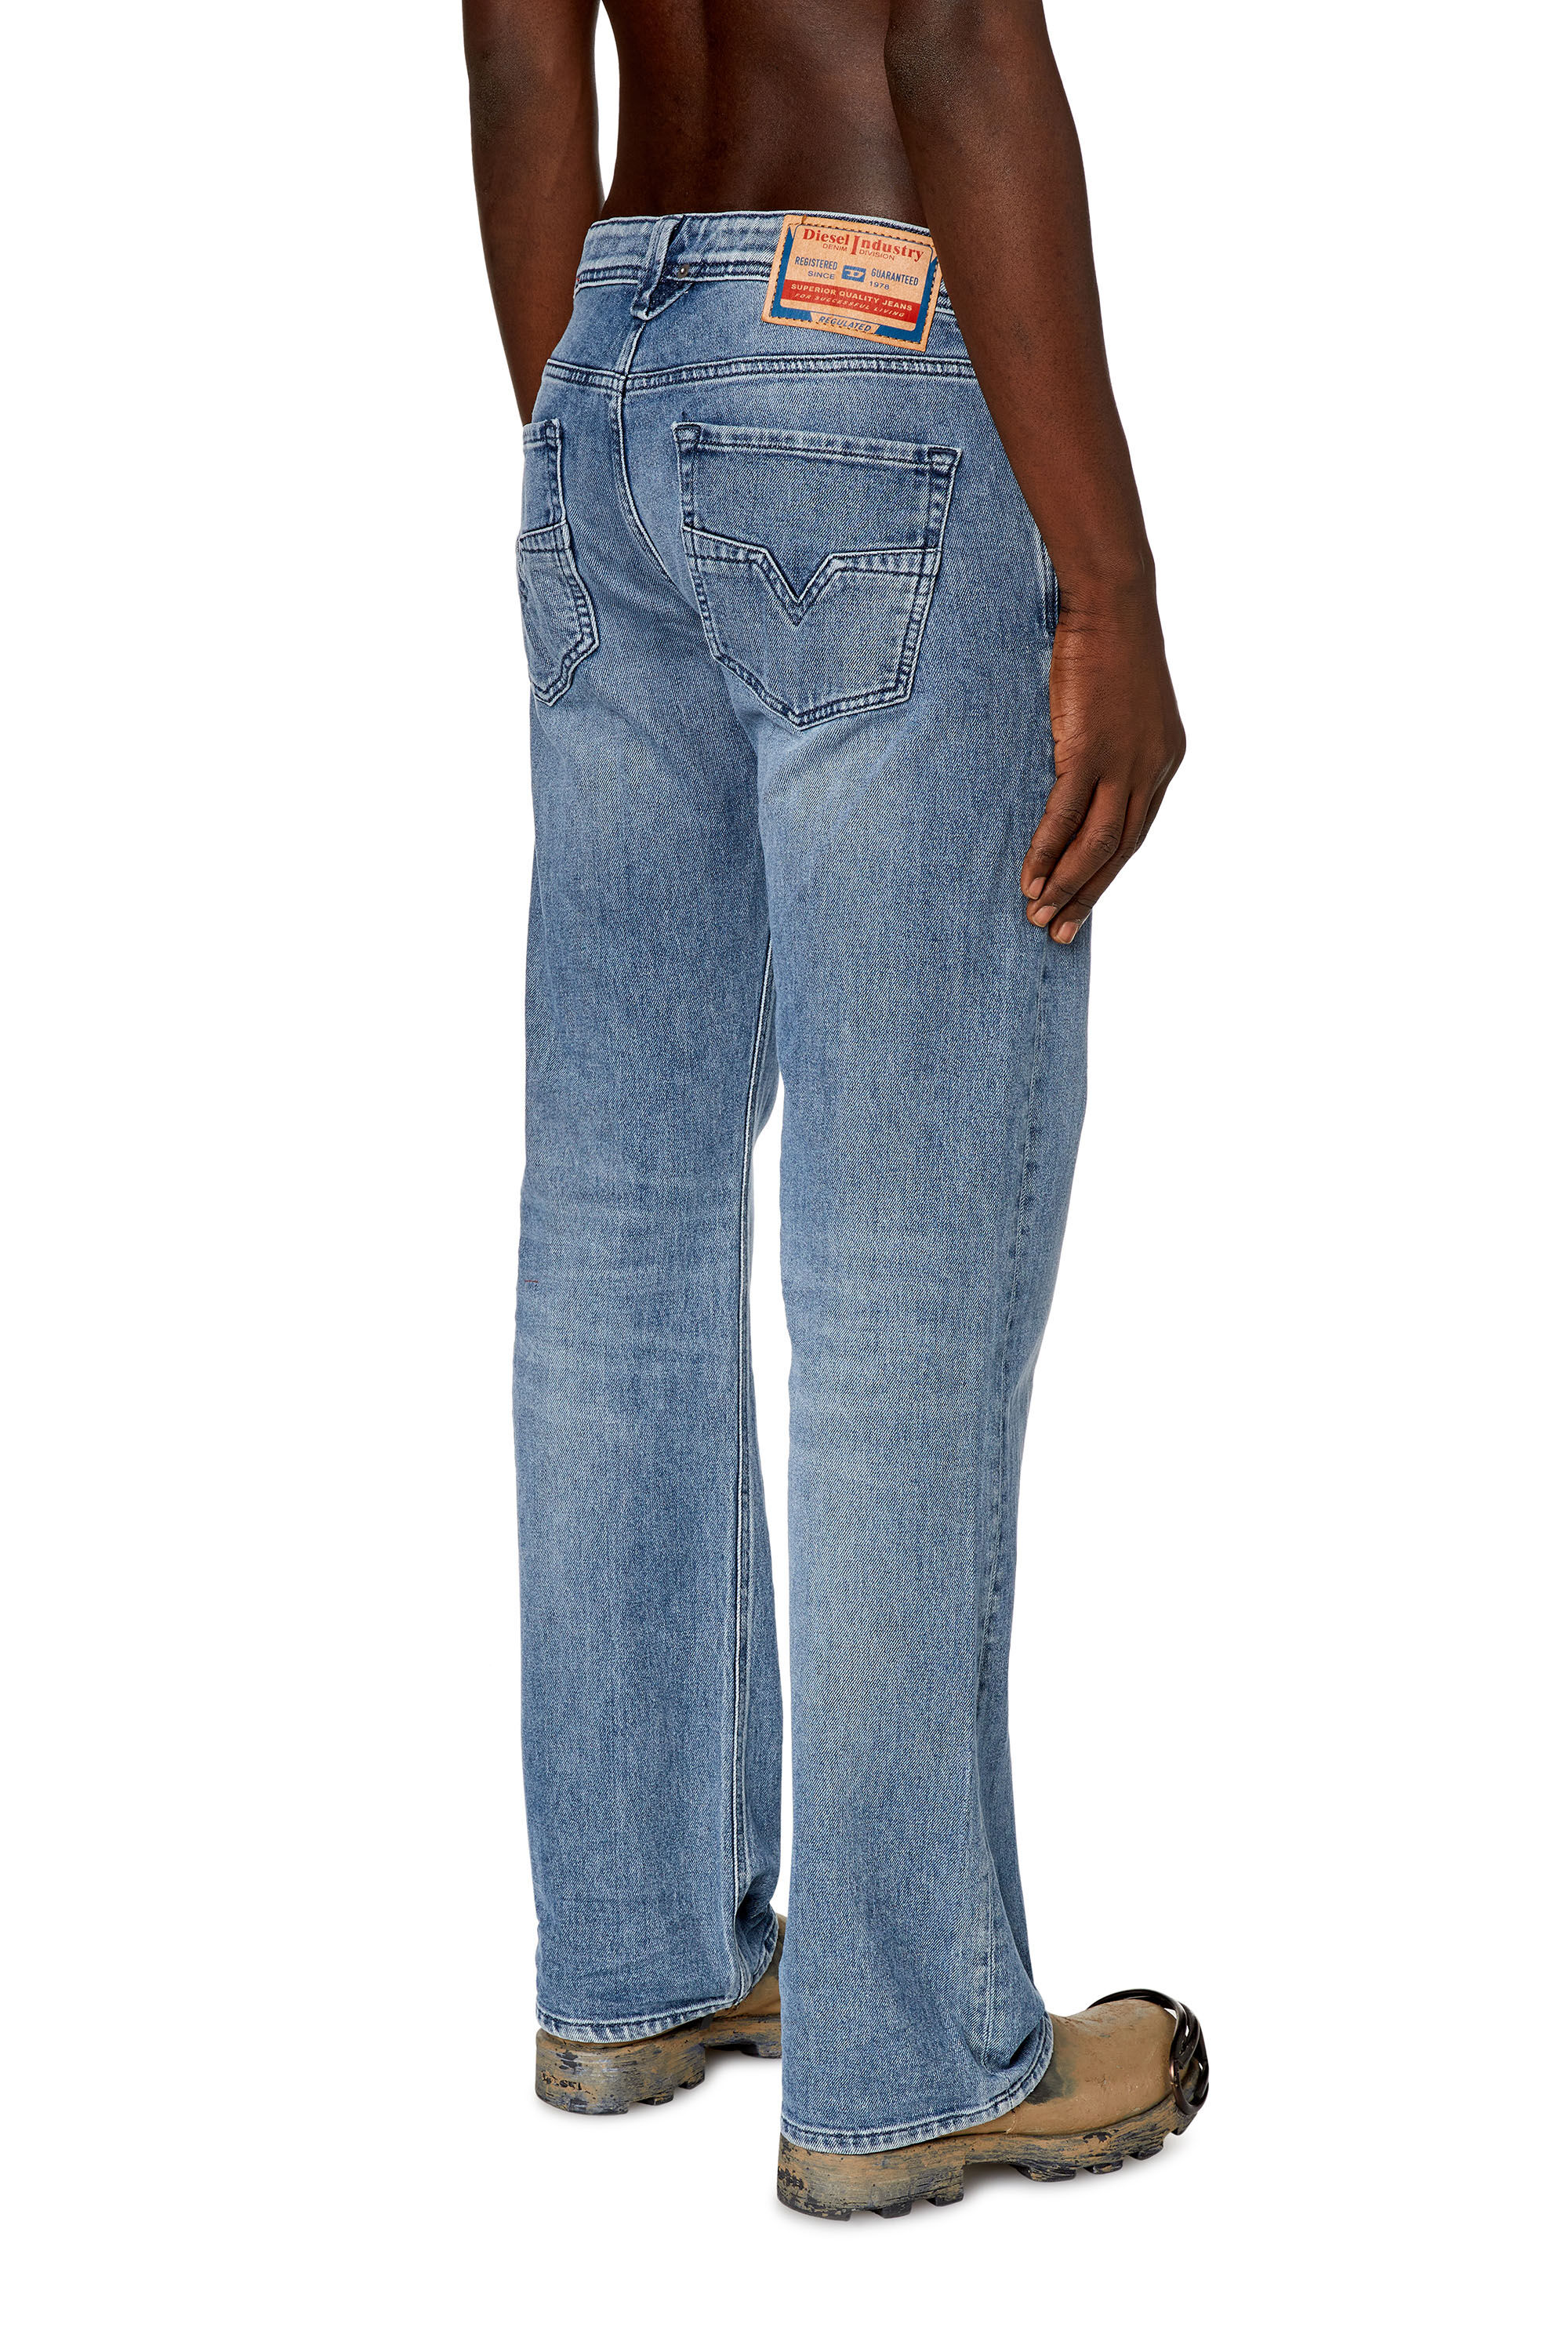 Men's Straight Jeans | Medium blue | Diesel 1985 Larkee